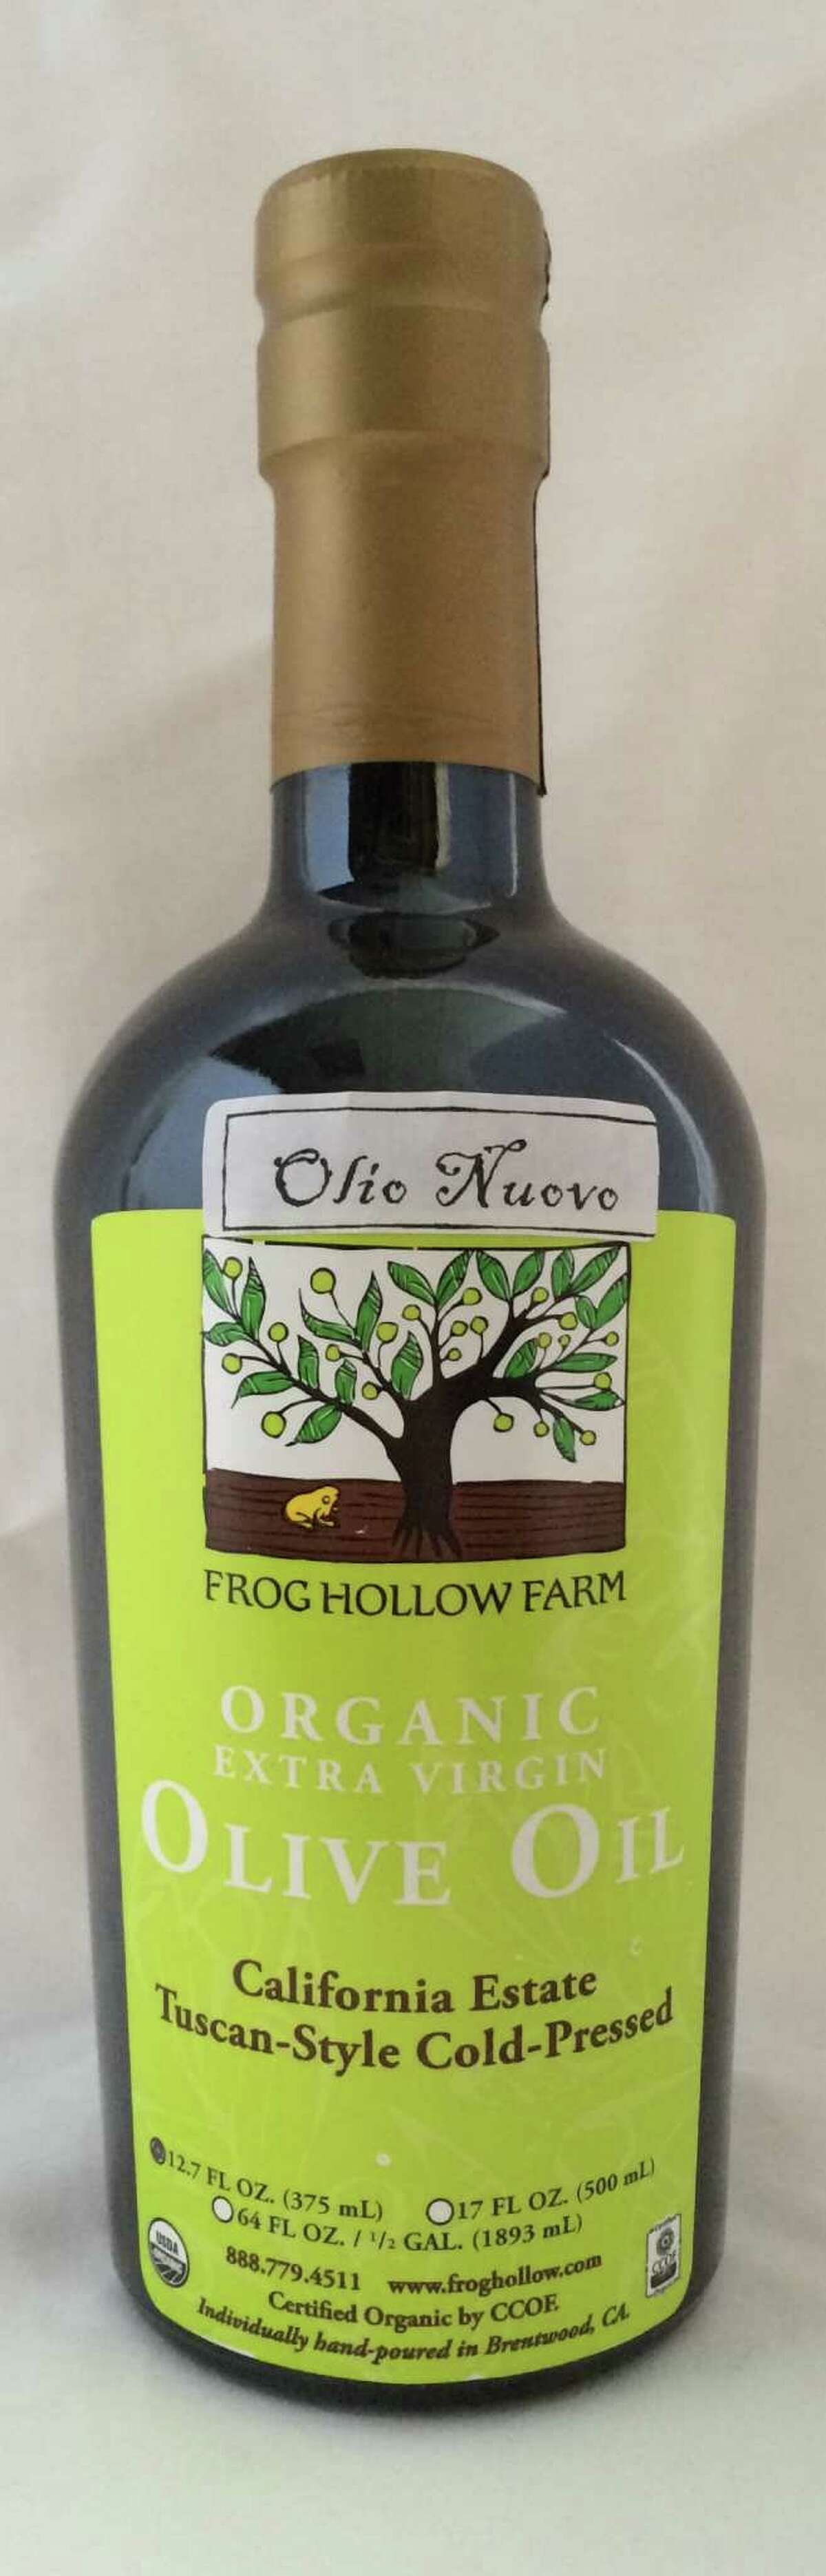 Frog Hollow Farm olio nuovo